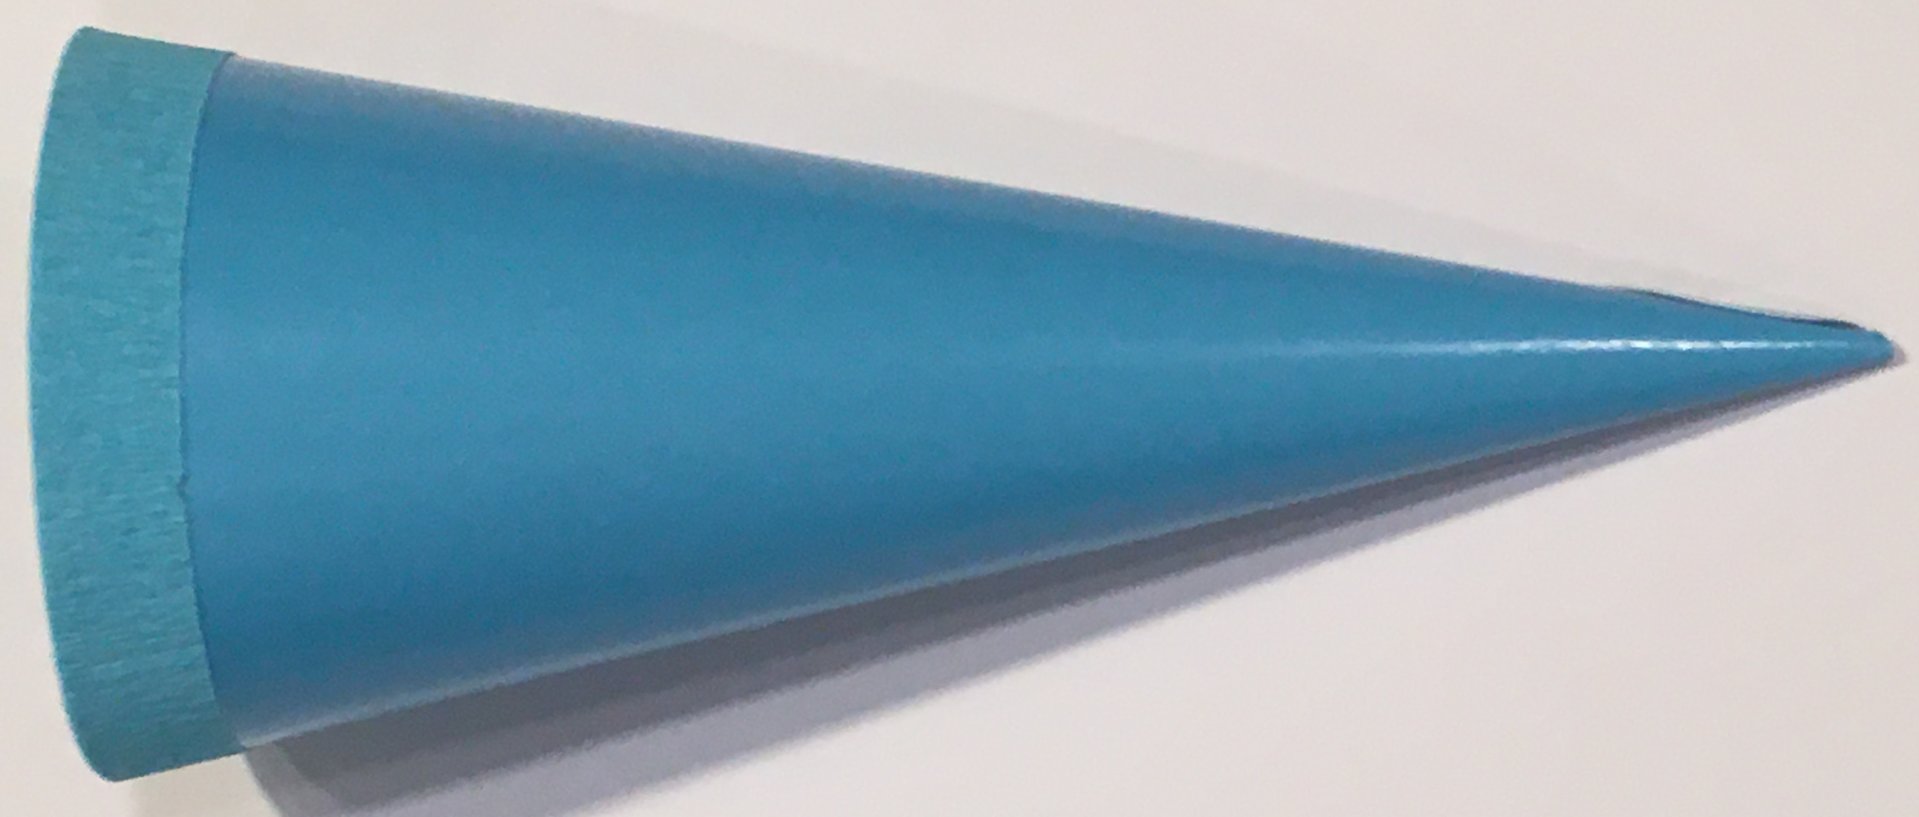 School cone light blue12 cm high